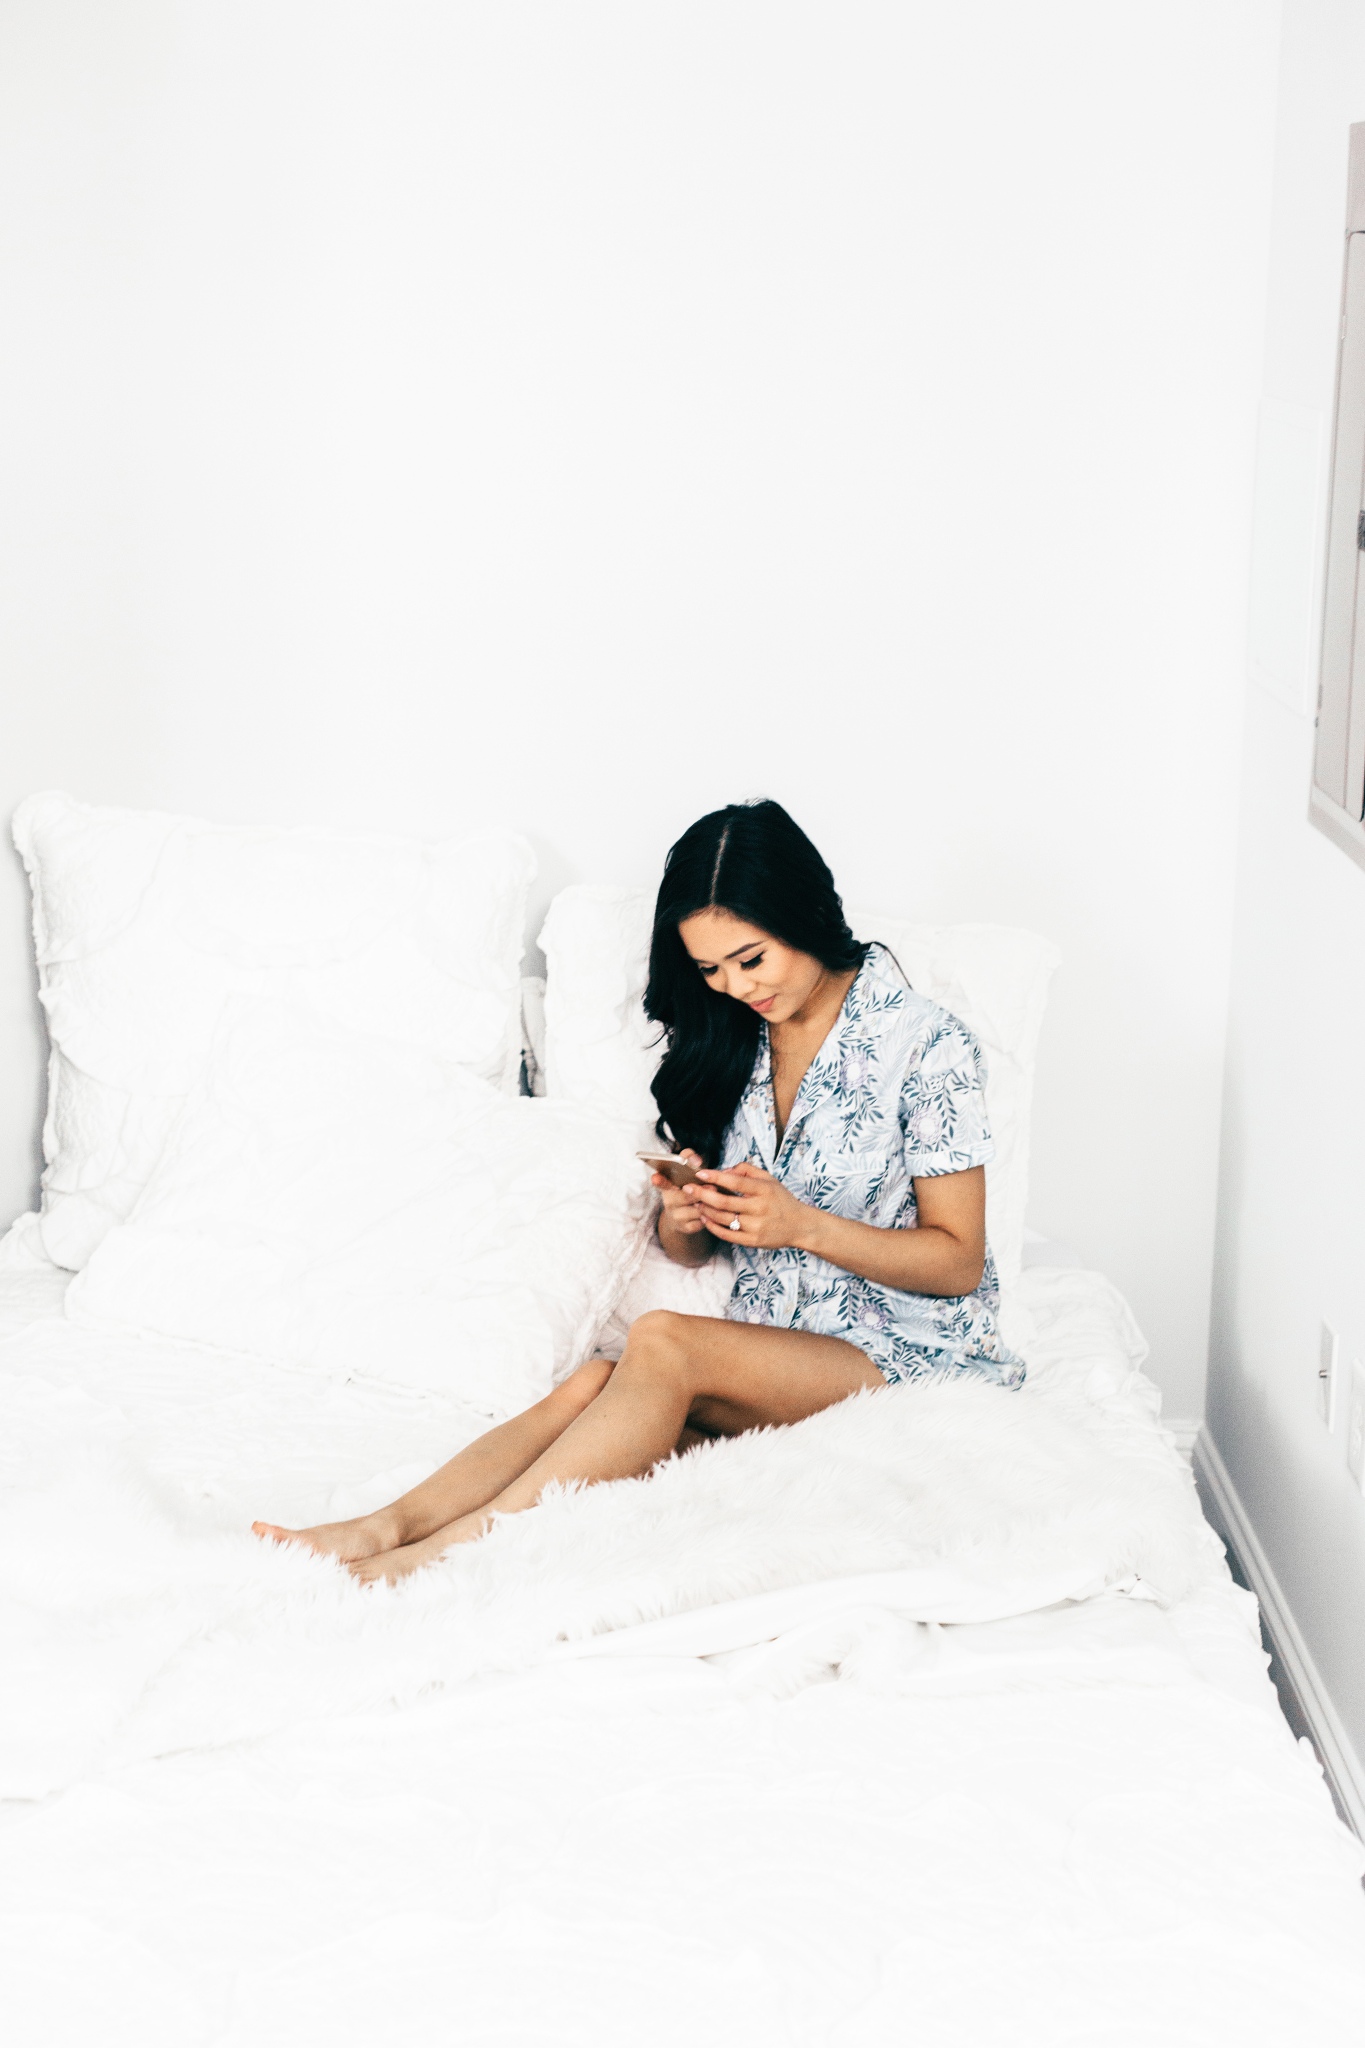 Blogger Hoang-Kim on her Leesa mattress in Plum Pretty Sugar PJs